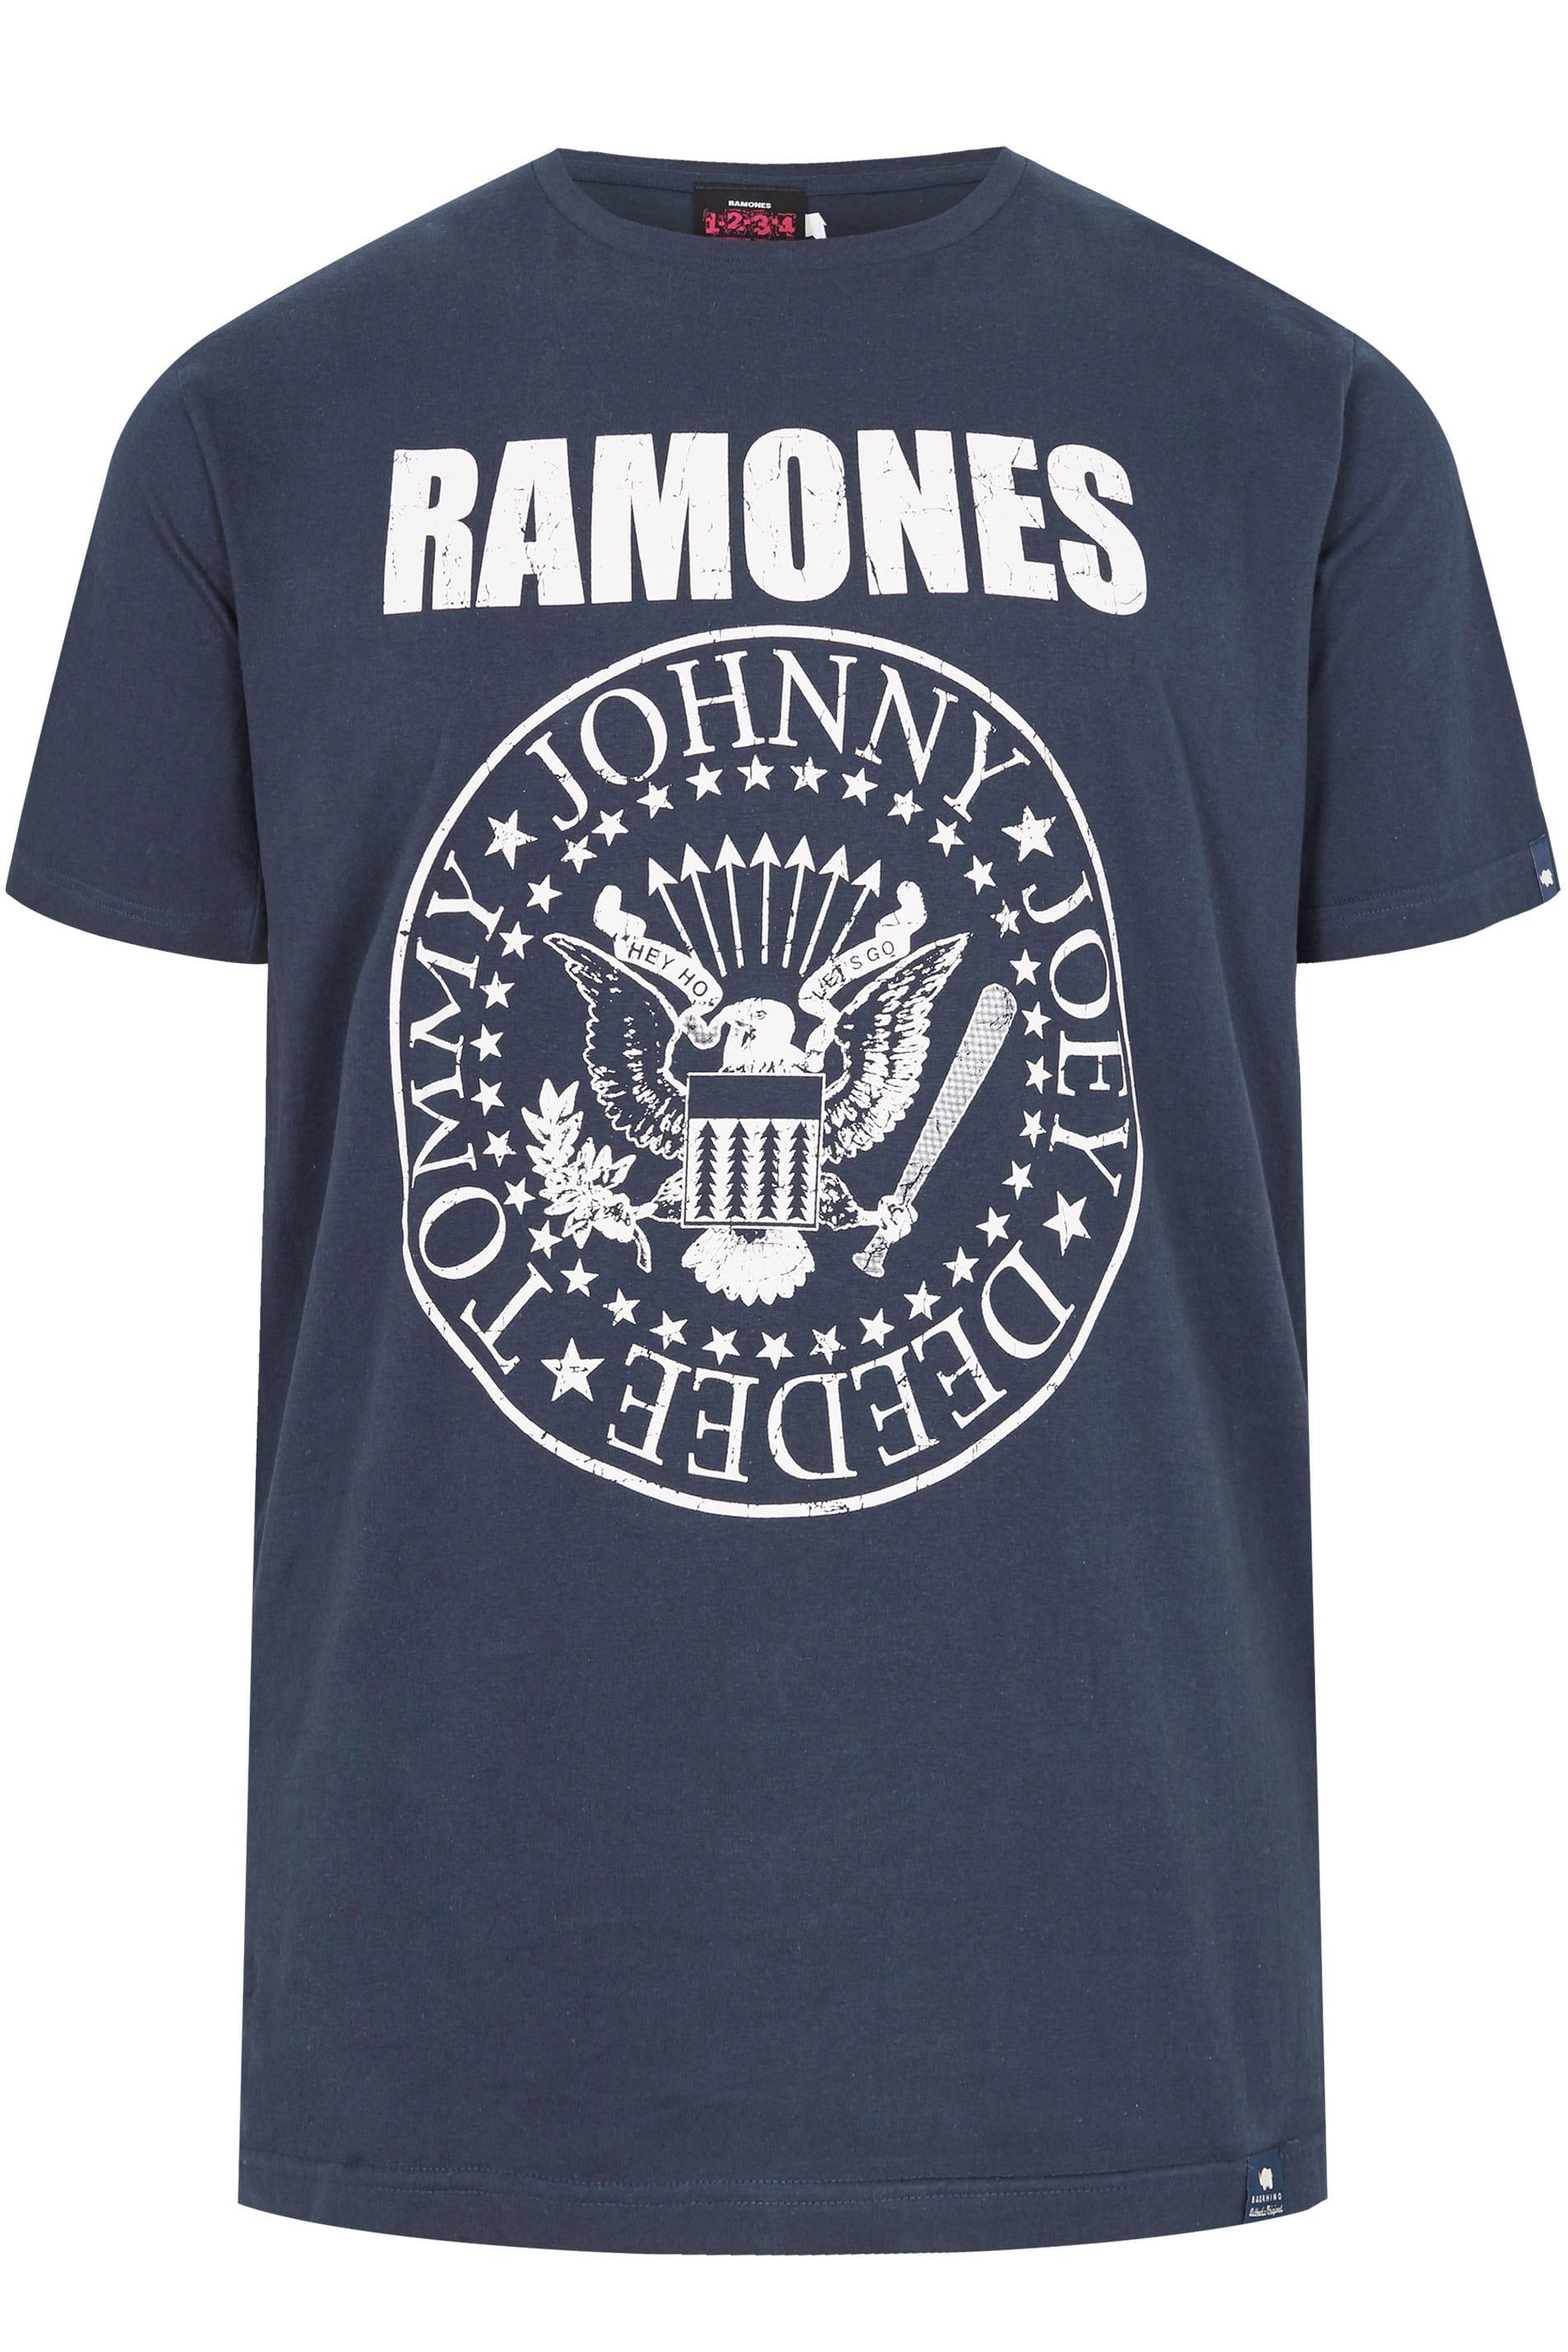 Clothing Rhino Logo - BadRhino Navy Ramones Logo T-Shirt | Sizes M to 6XLT | BadRhino